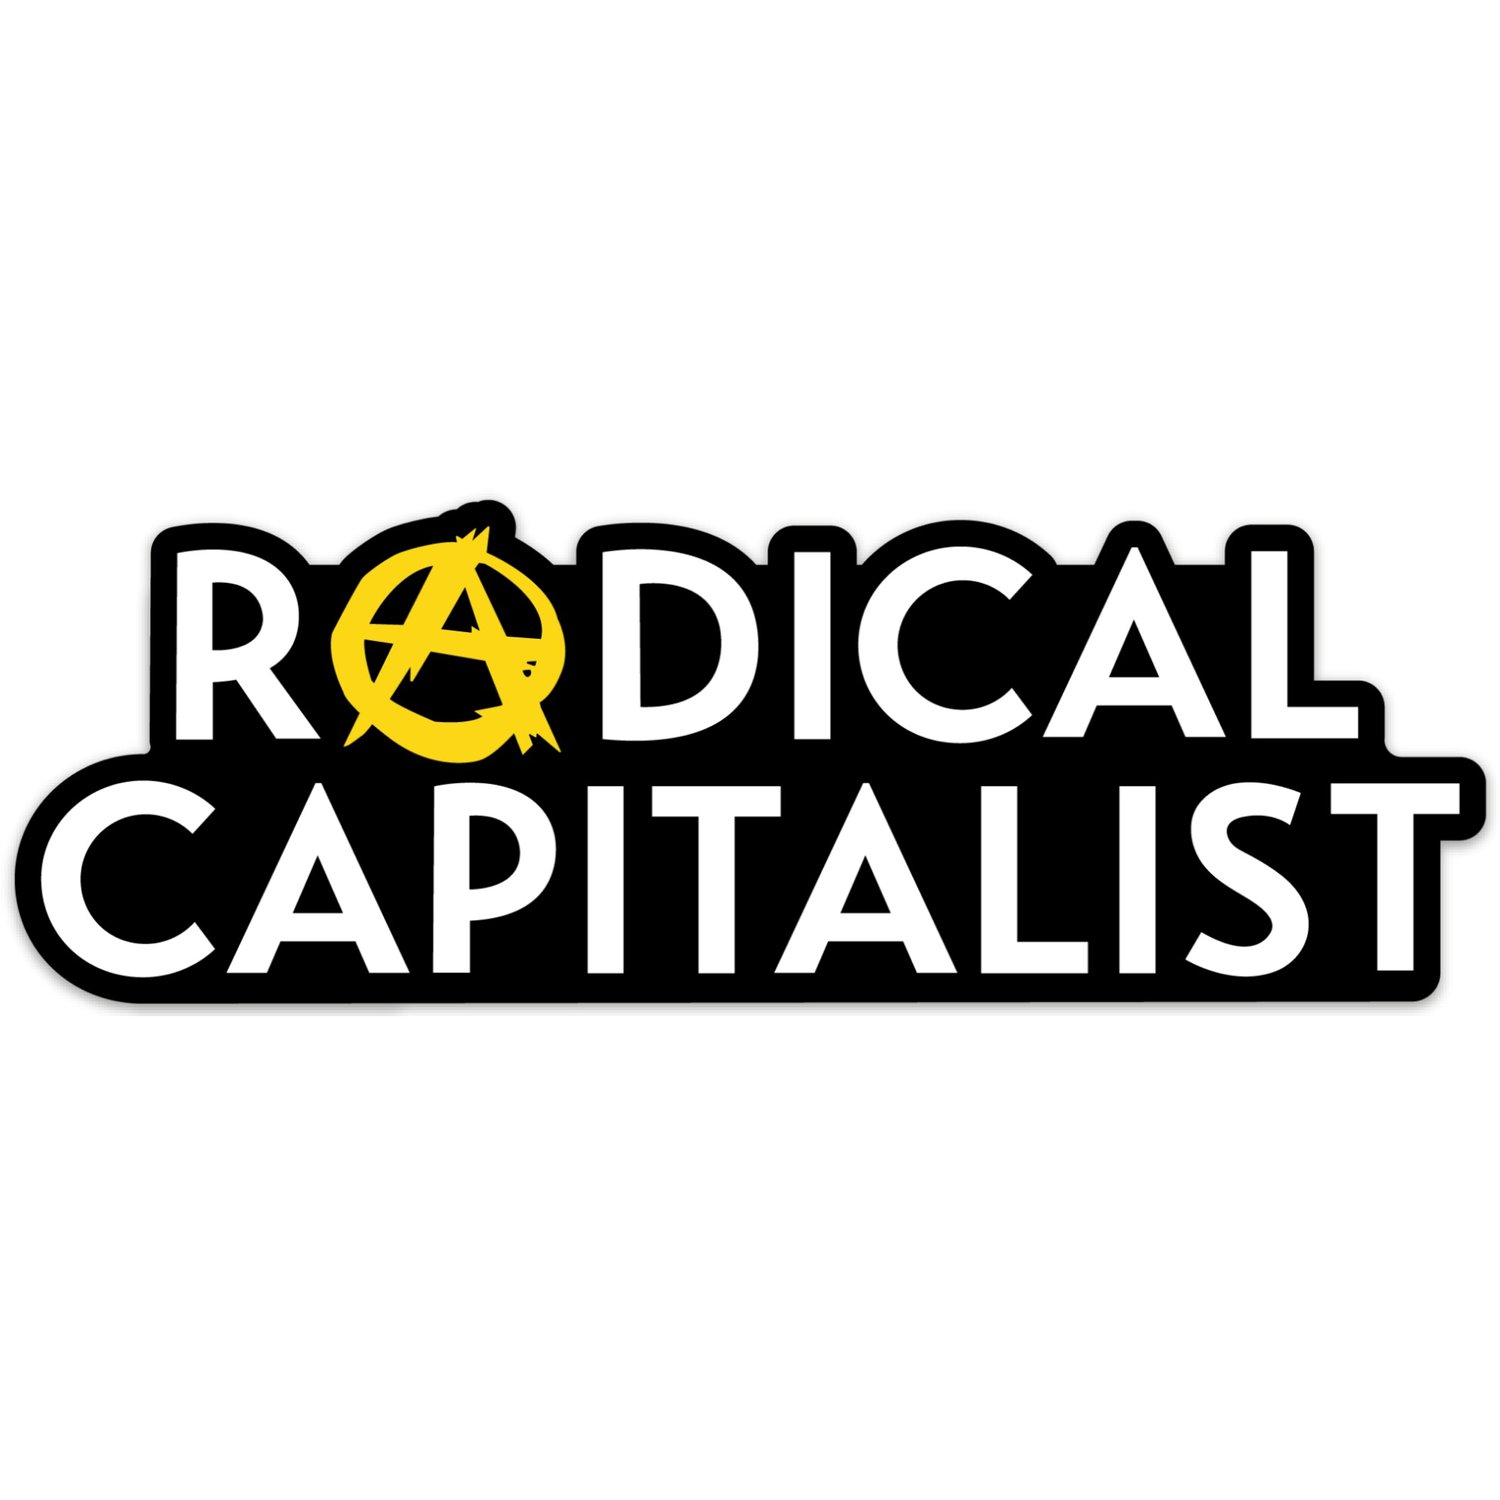 Image of Radical Capitalist Diecut Sticker